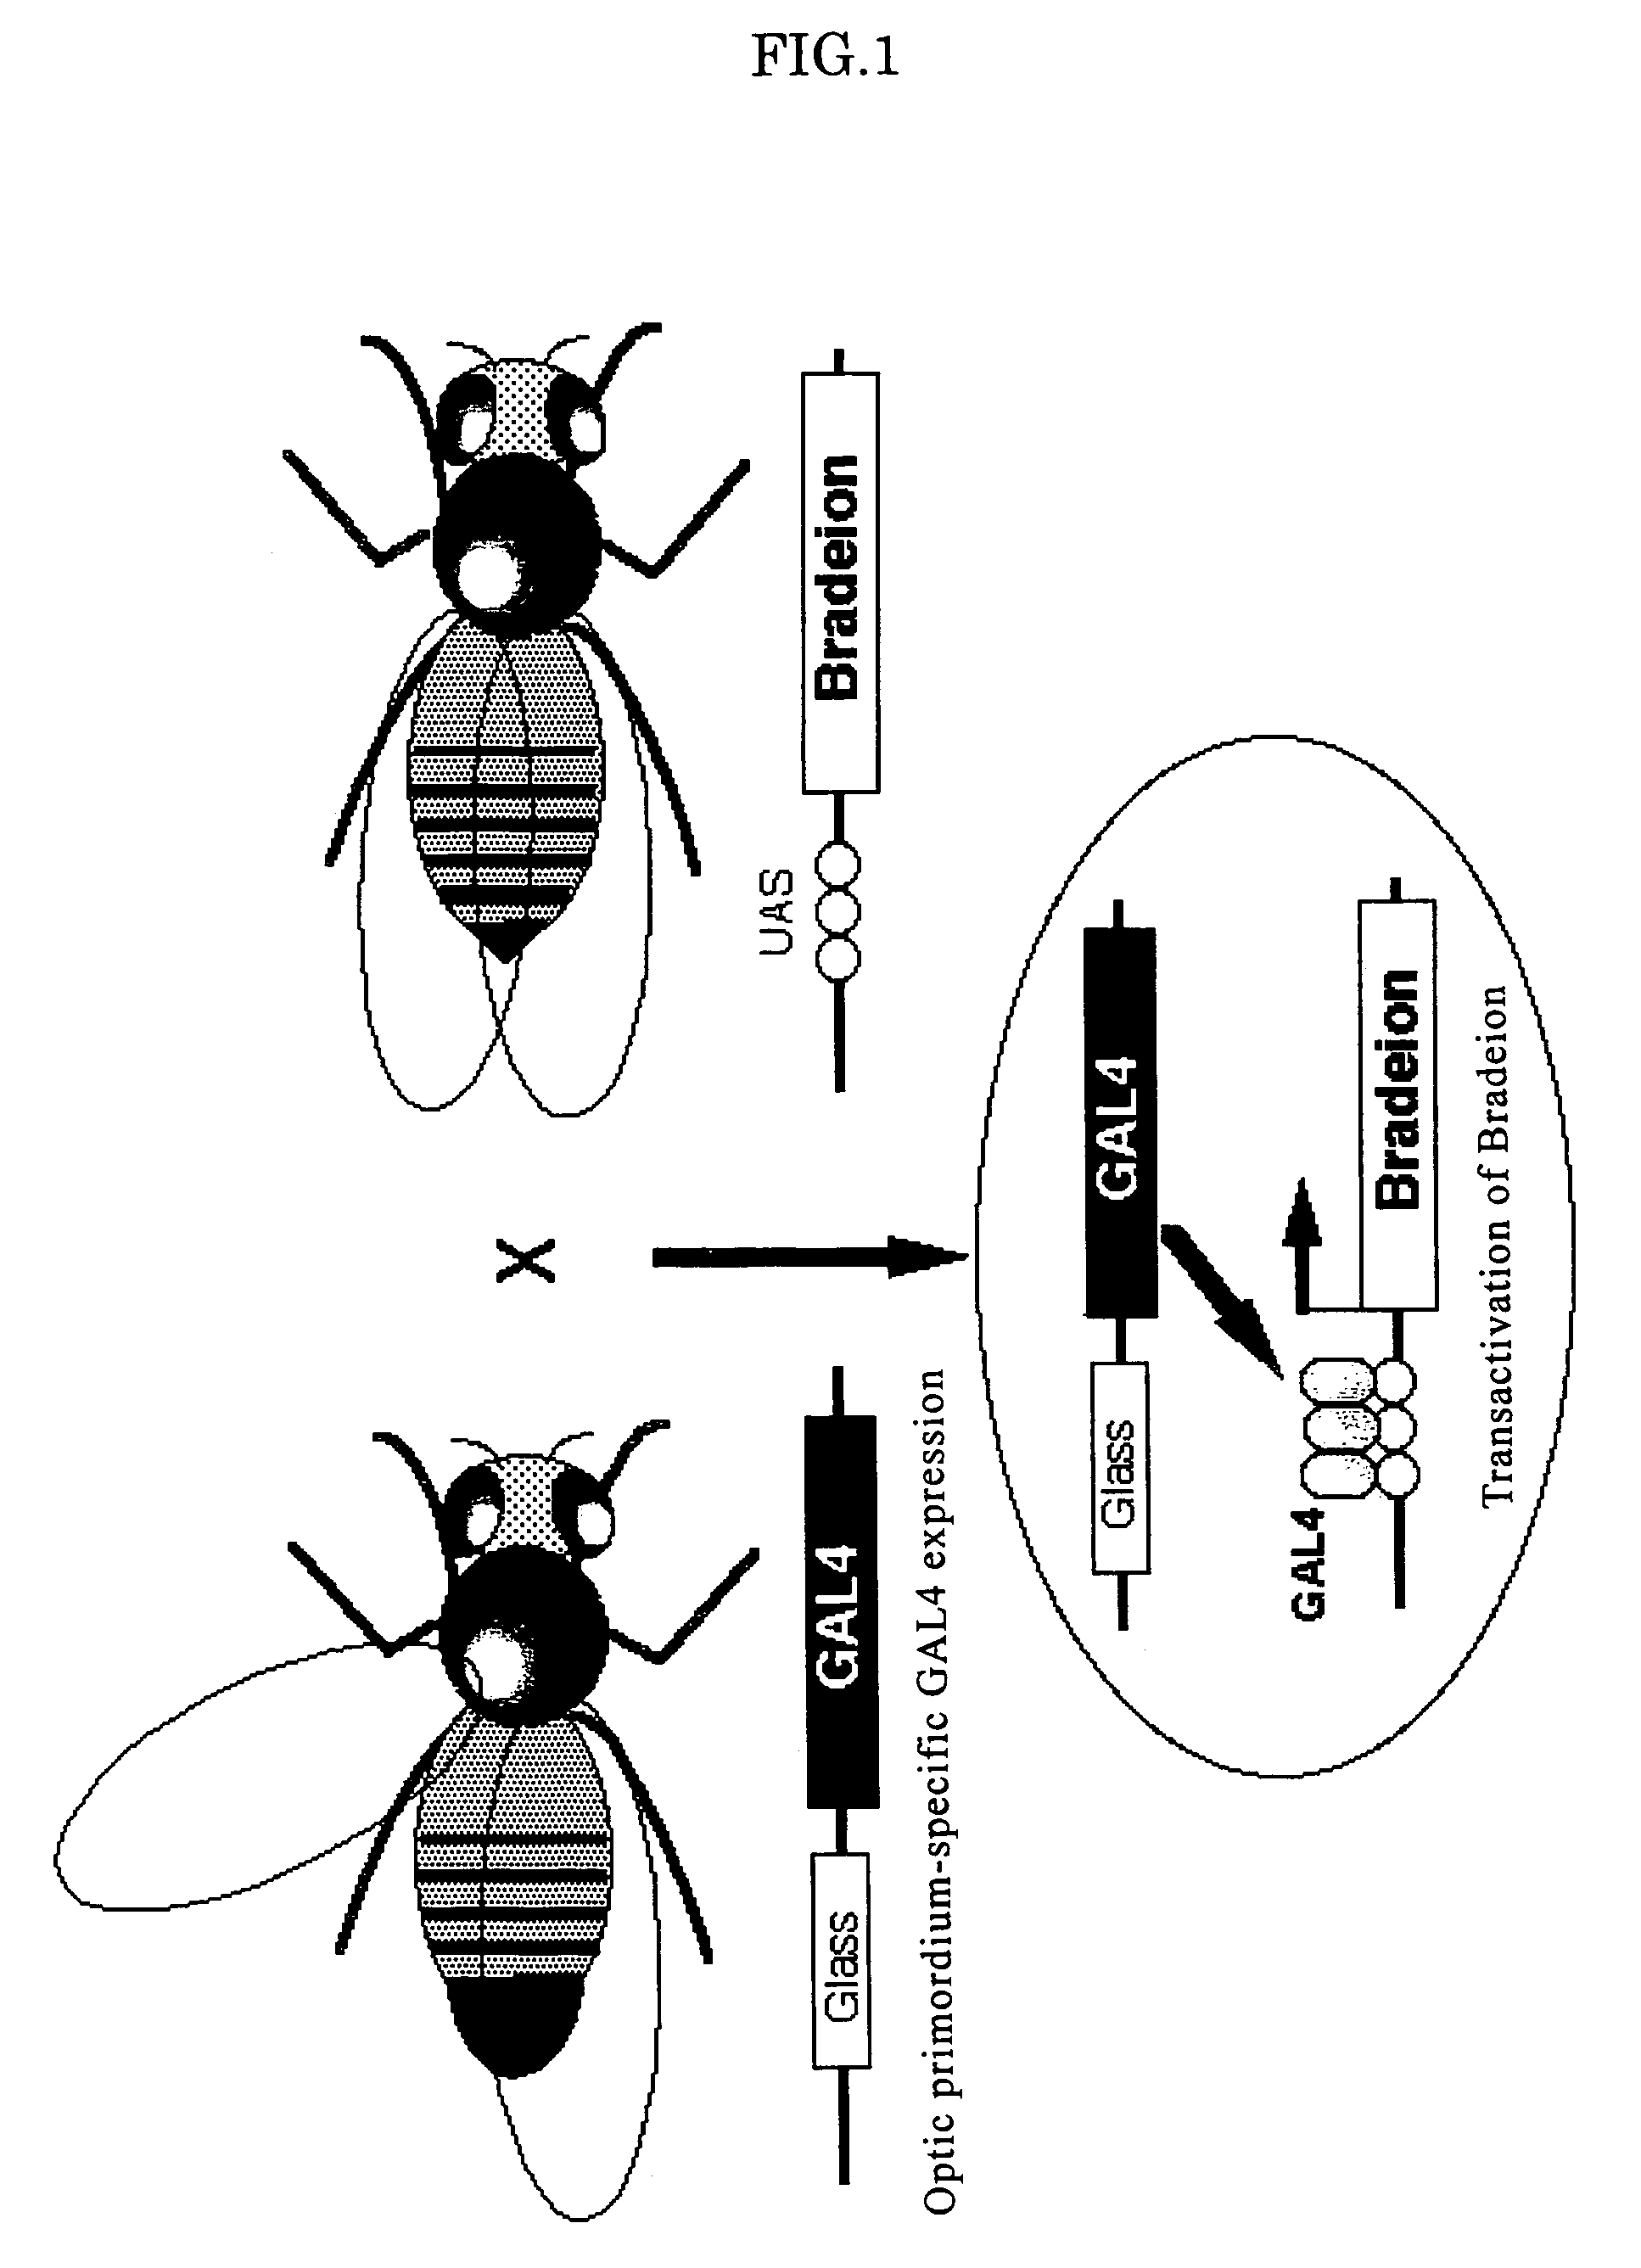 Drosophila strain carrying bradeion gene(s) transferred thereinto